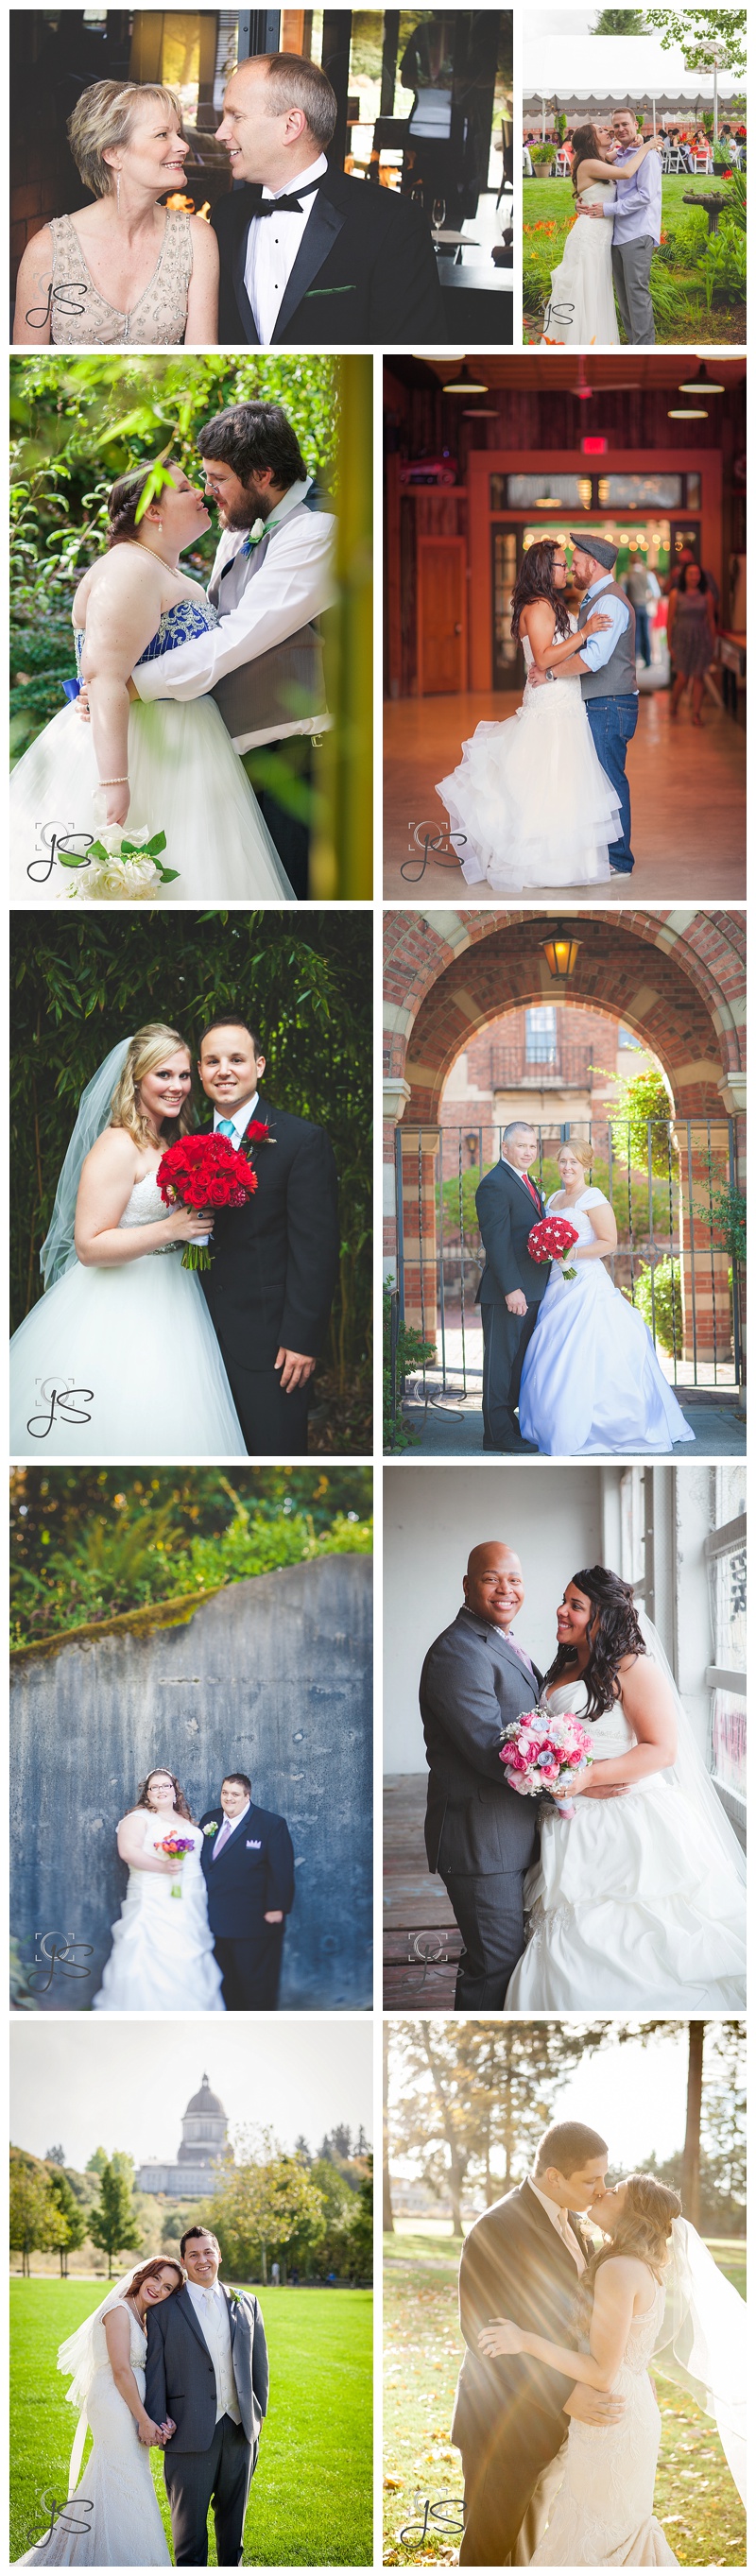 2014 Wedding season by Jenny Storment Photography